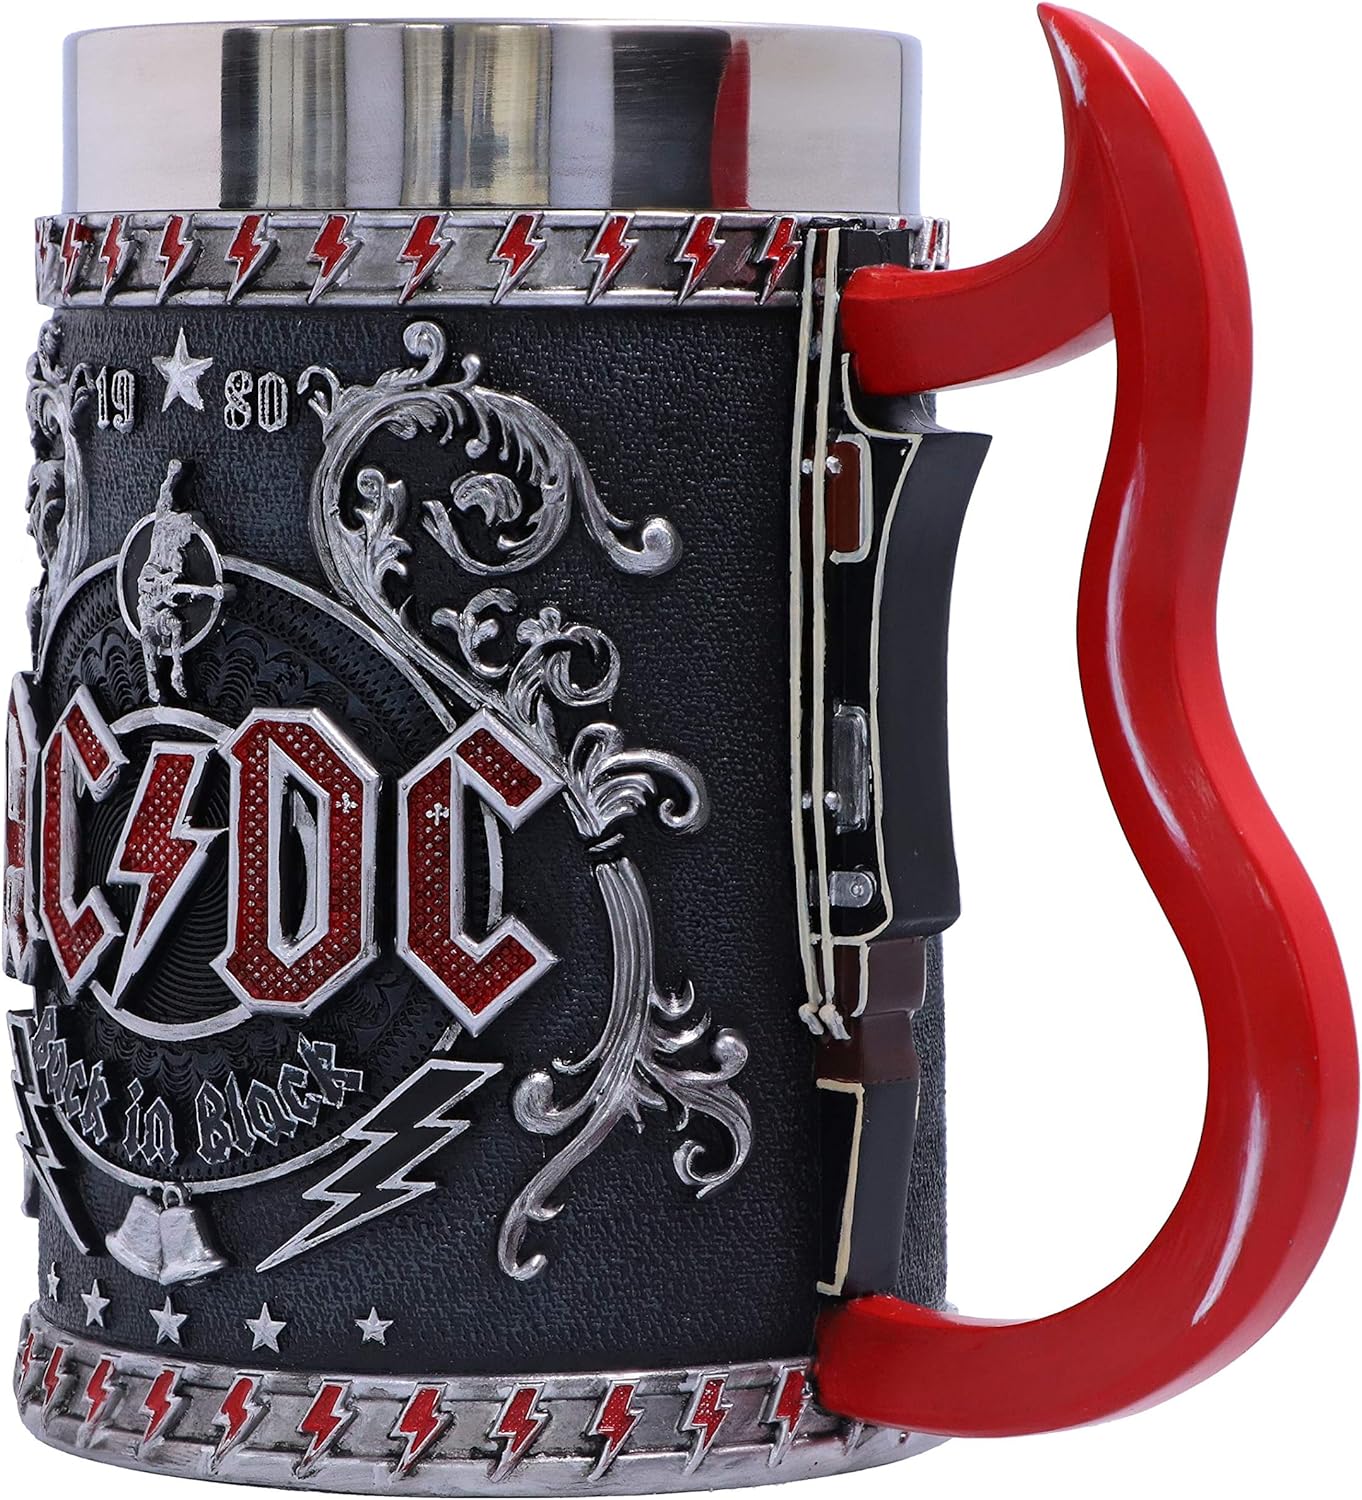 ACDC Rock Band Stainless Steel Mug